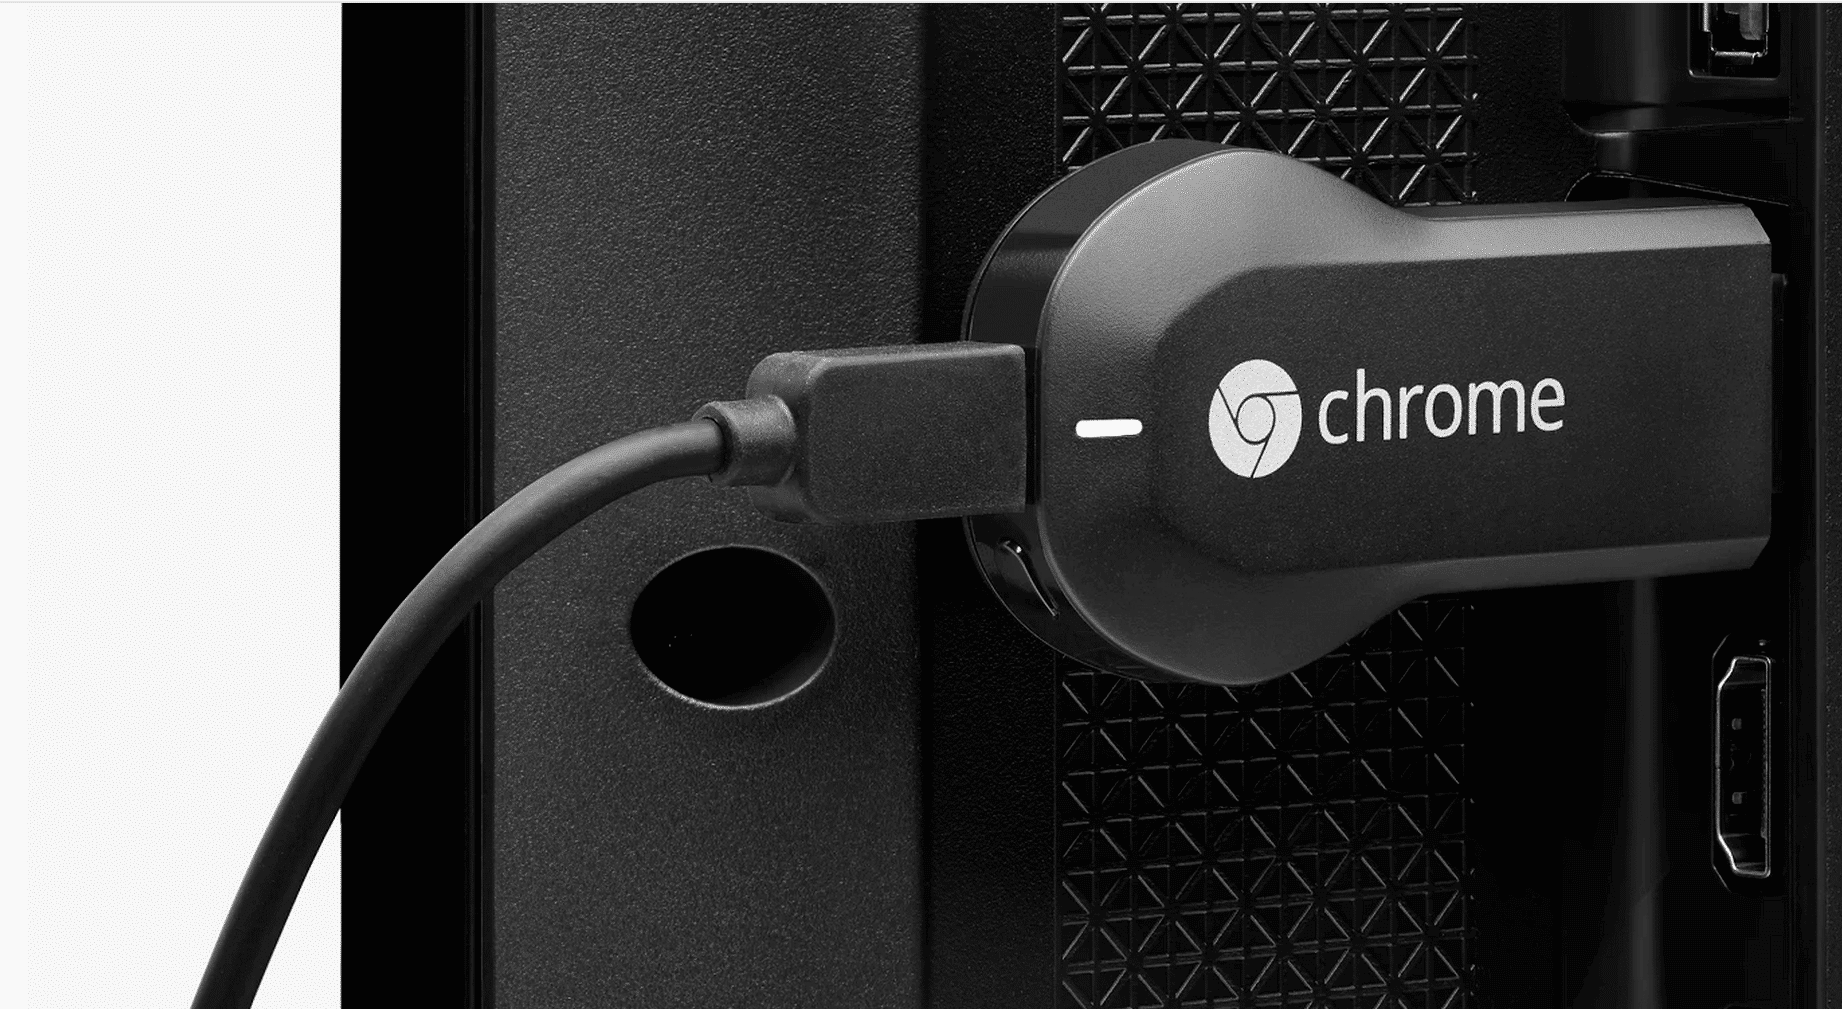 chromecast-ethernet-adapter-techbug-pixel-android-google